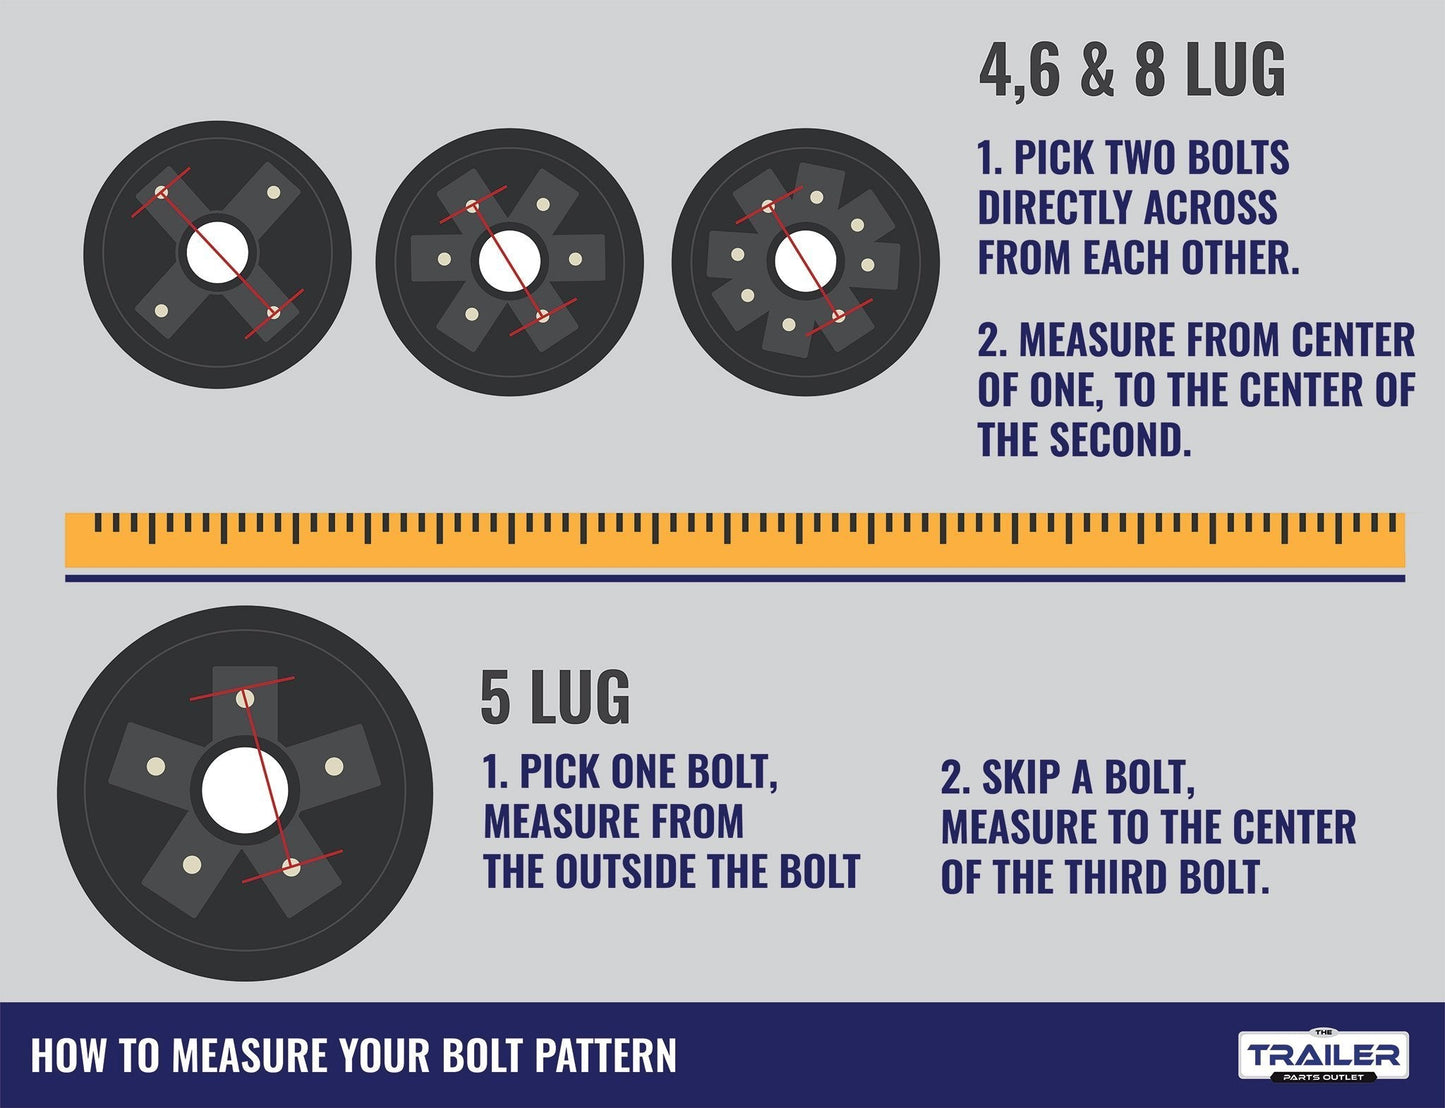 15" 10 ply Radial Trailer Tire & Wheel - ST 225/75R15 5X4.5 (Black Mod) - Liquidation Sale